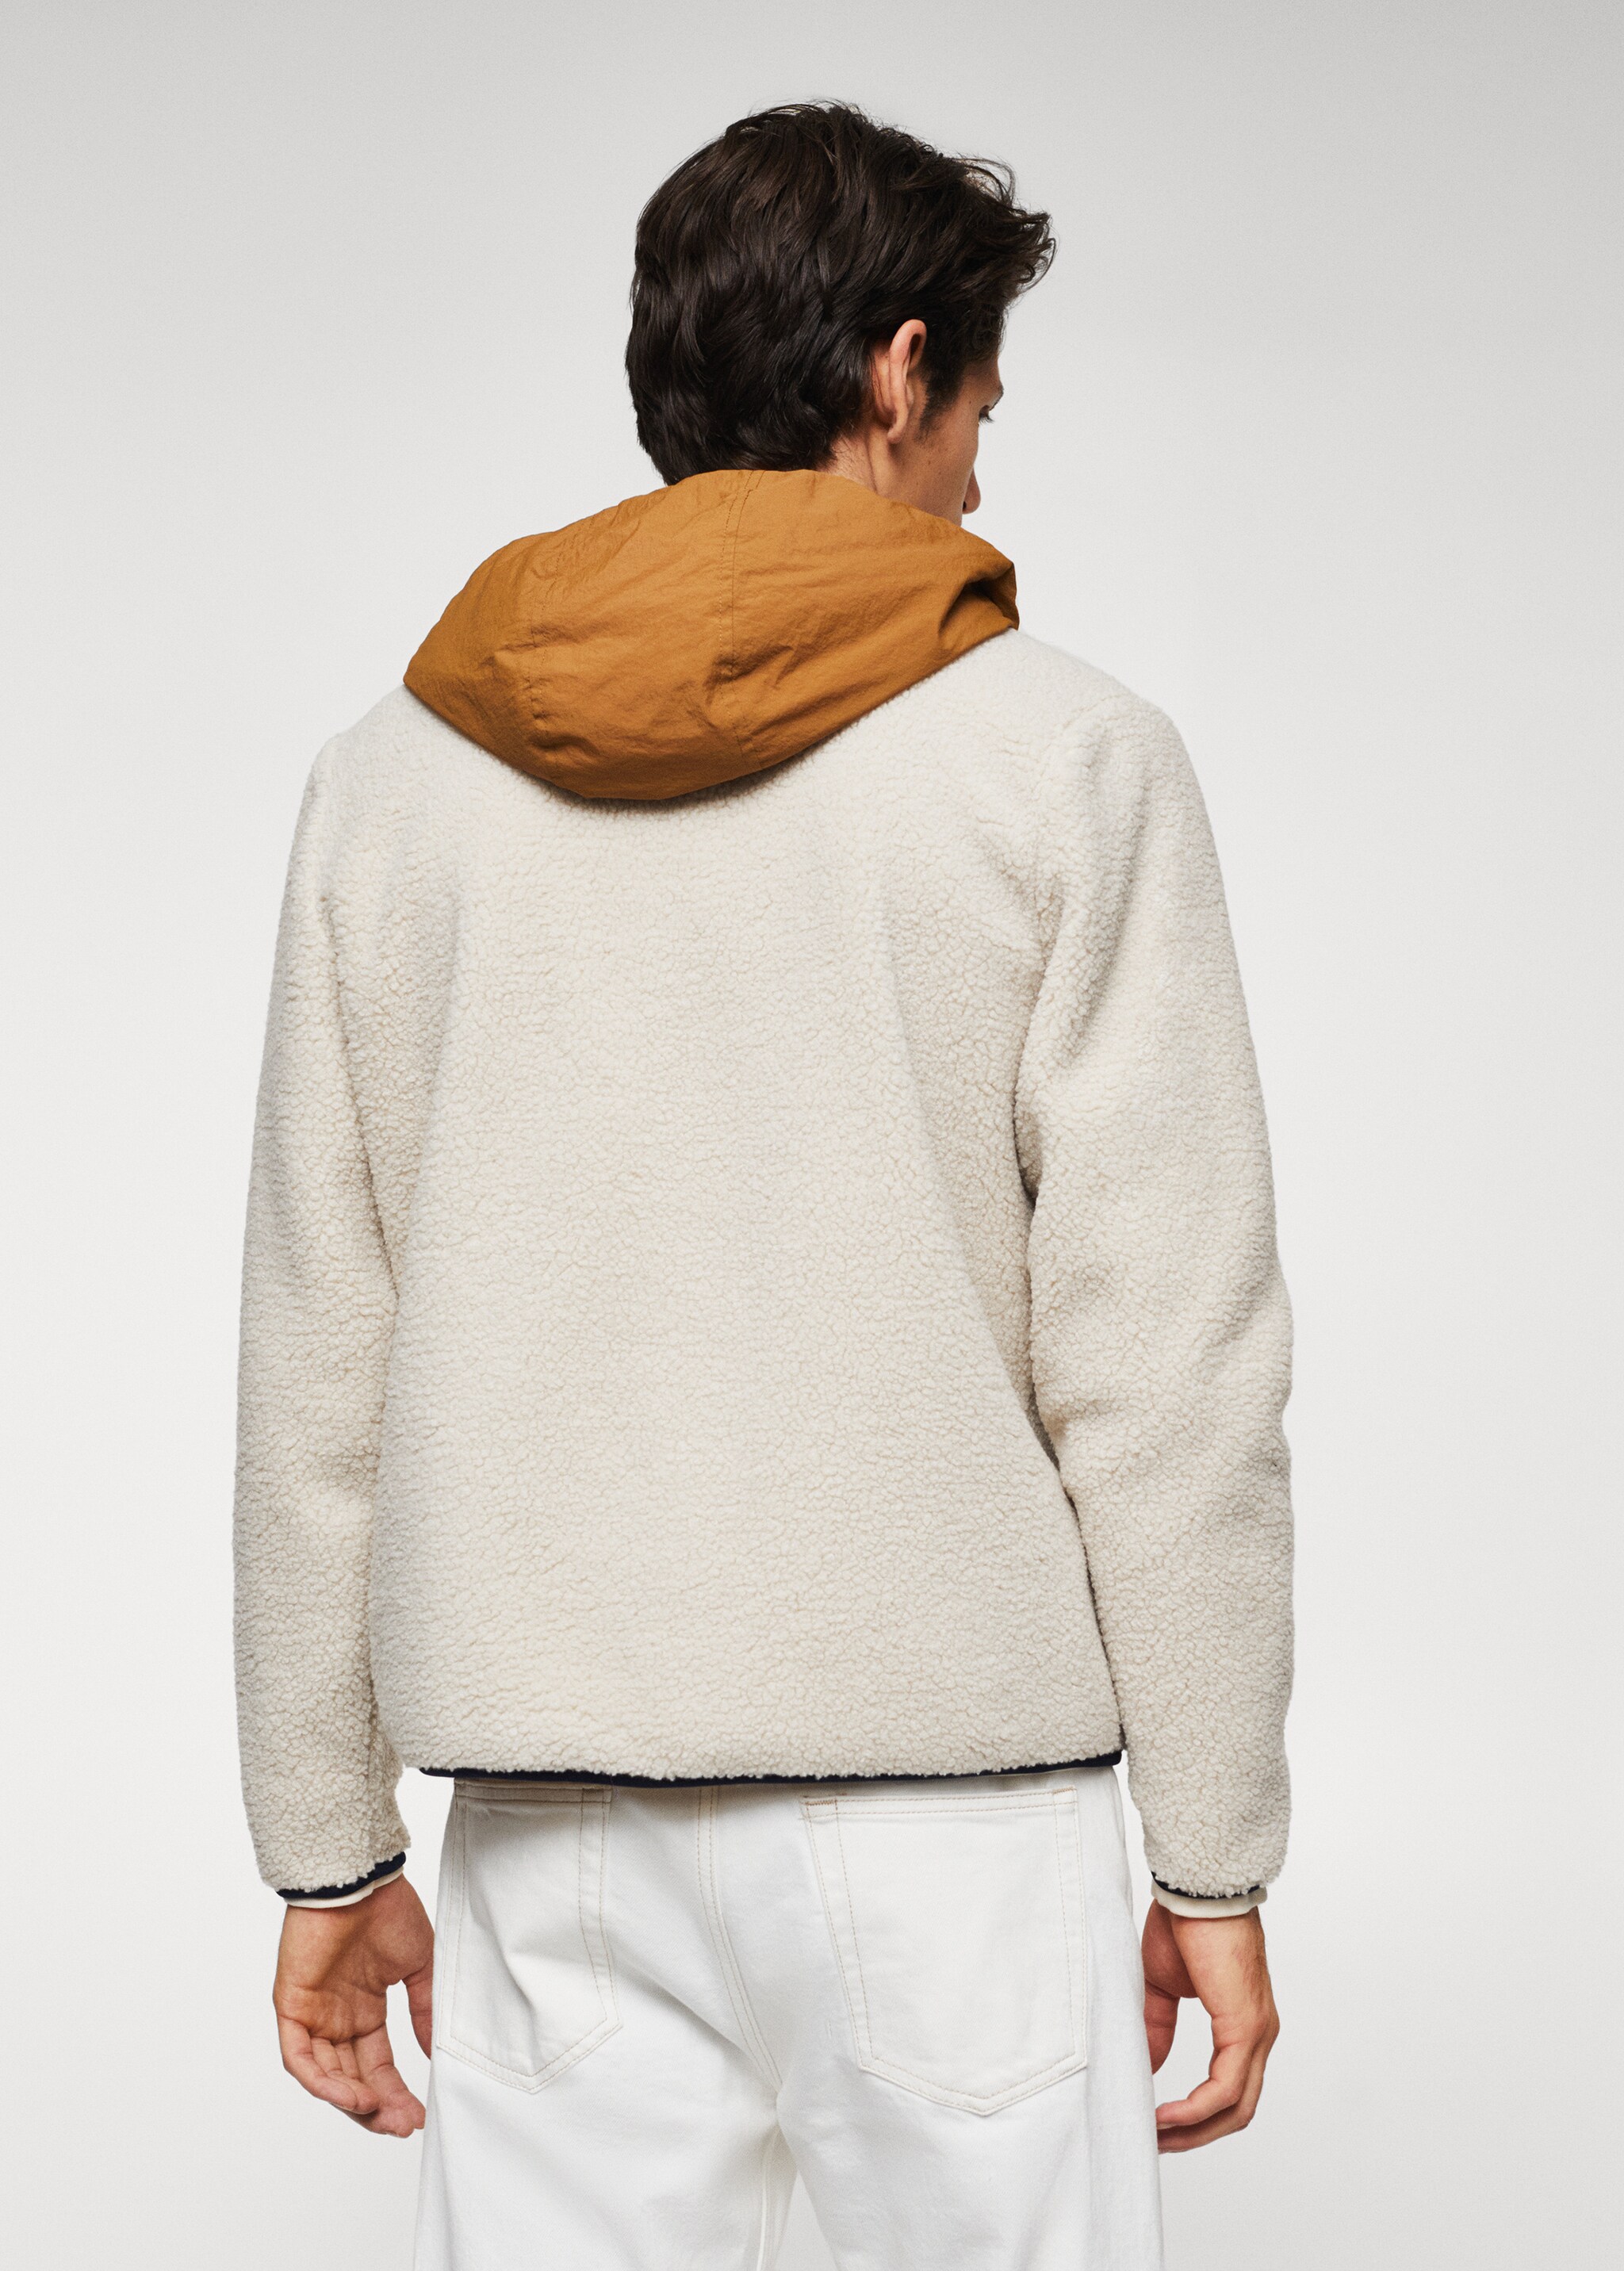 Contrasting sheepskin sweatshirt - Reverse of the article